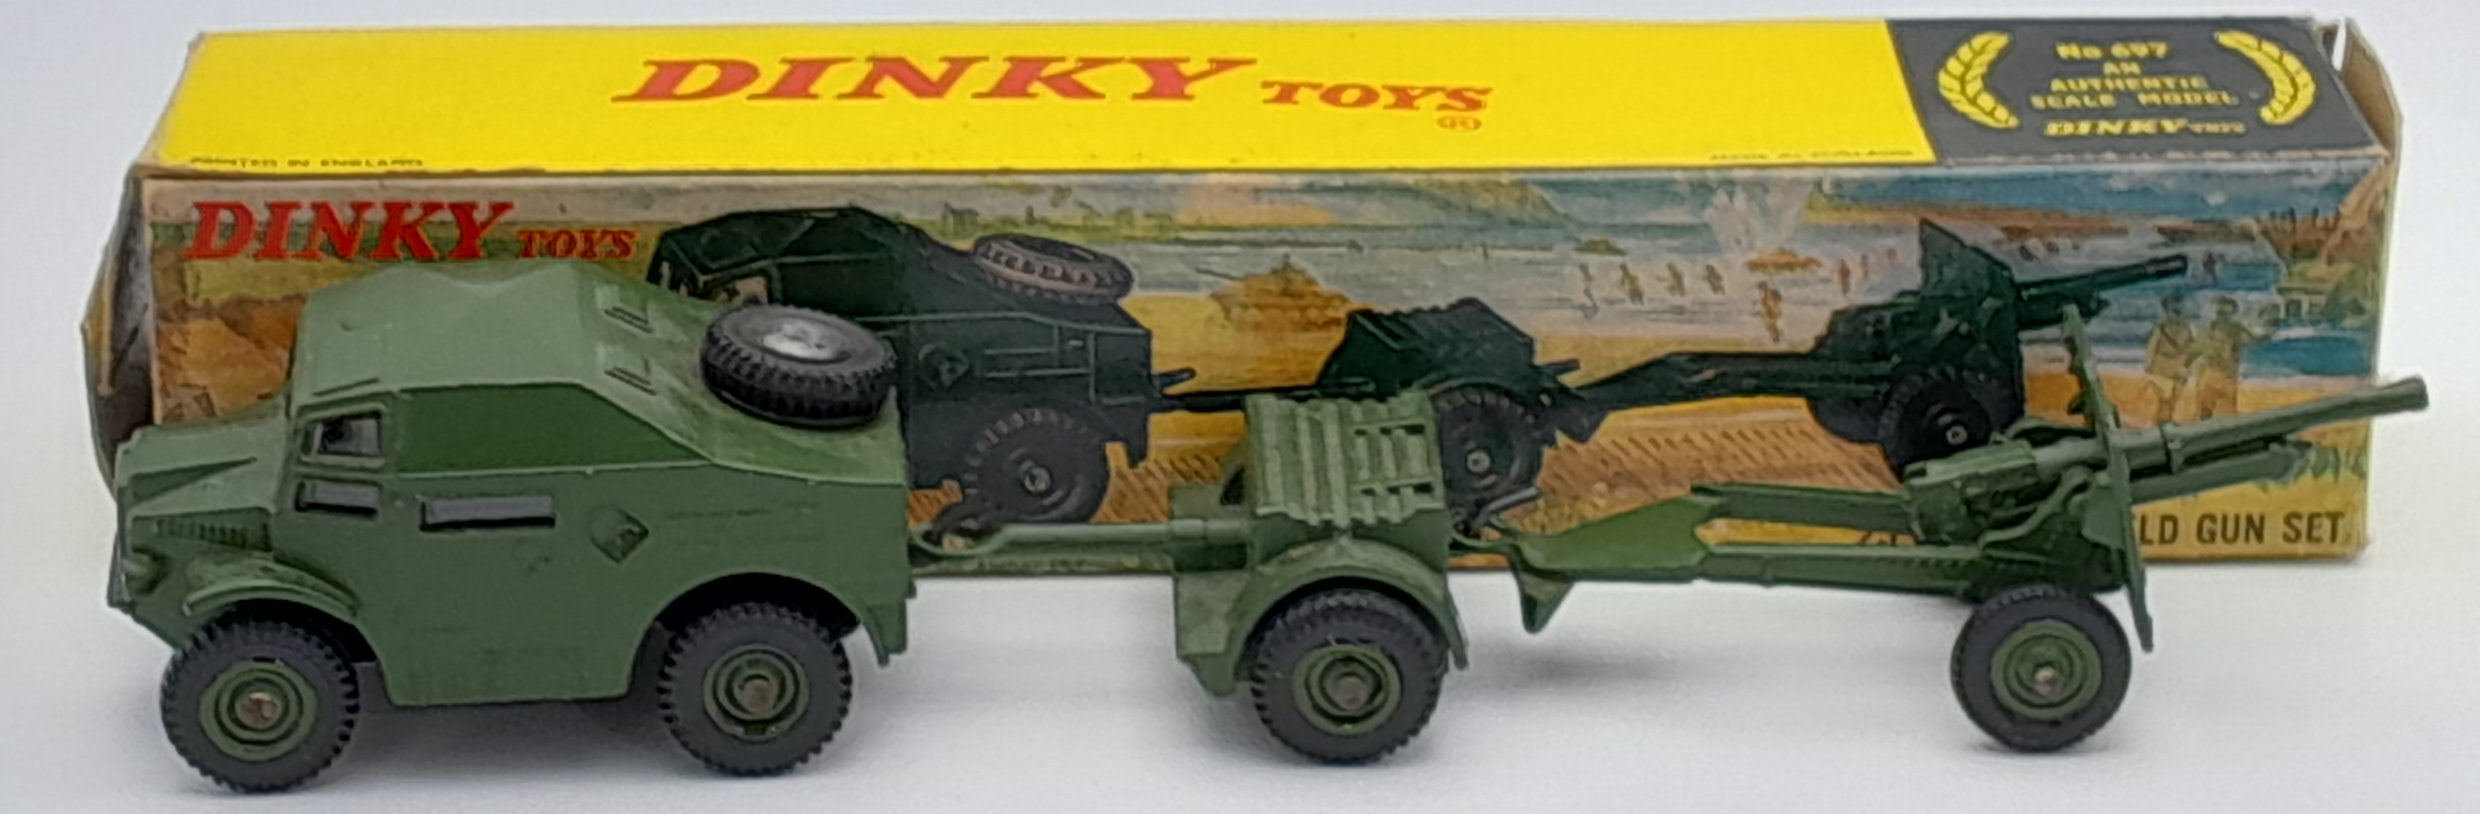 Dinky 697 25 Pounder Field Gun Set